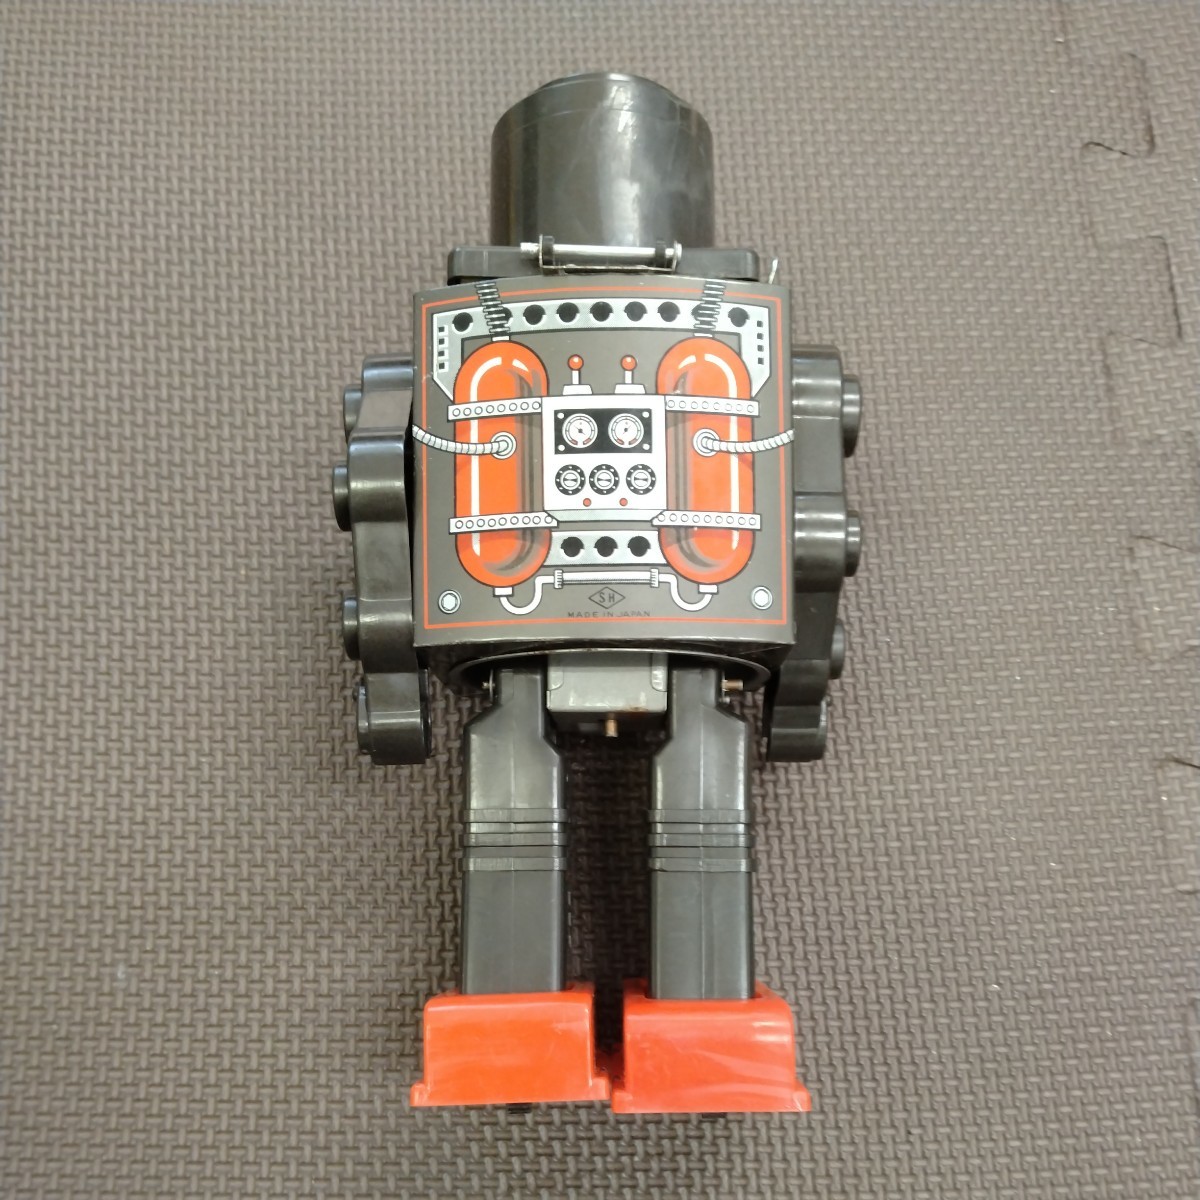  tin plate robot Showa Retro rare box attaching ROTO ROBOT battery type Vintage rare made in Japan 